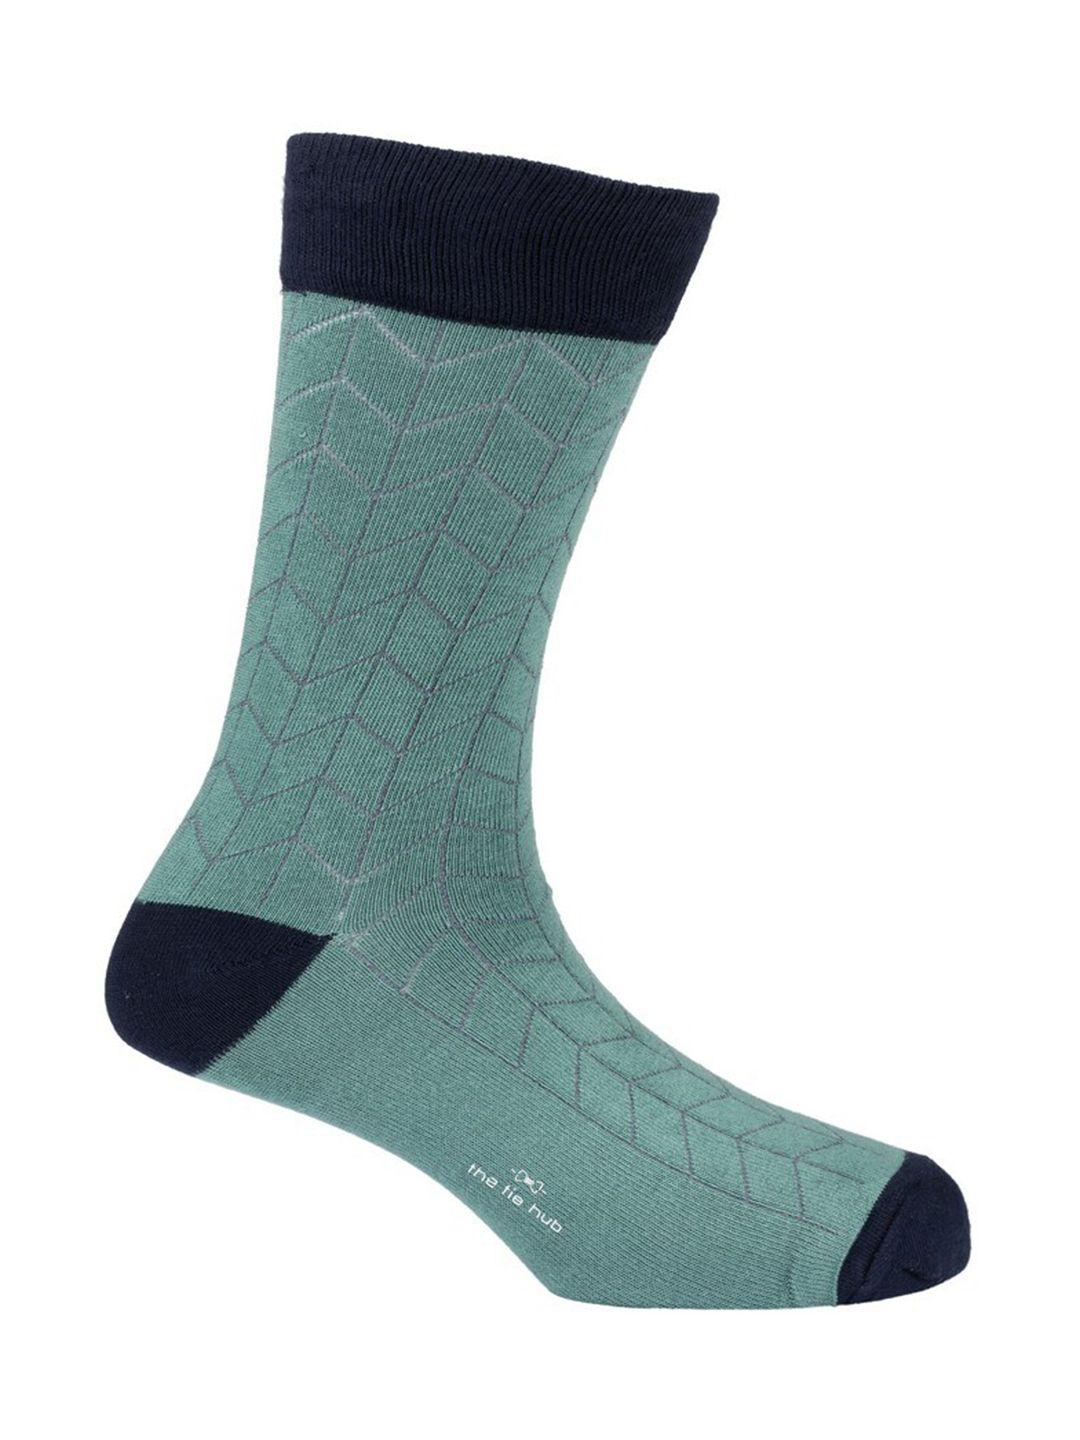 the-tie-hub-men-sea-green-calf-length-socks